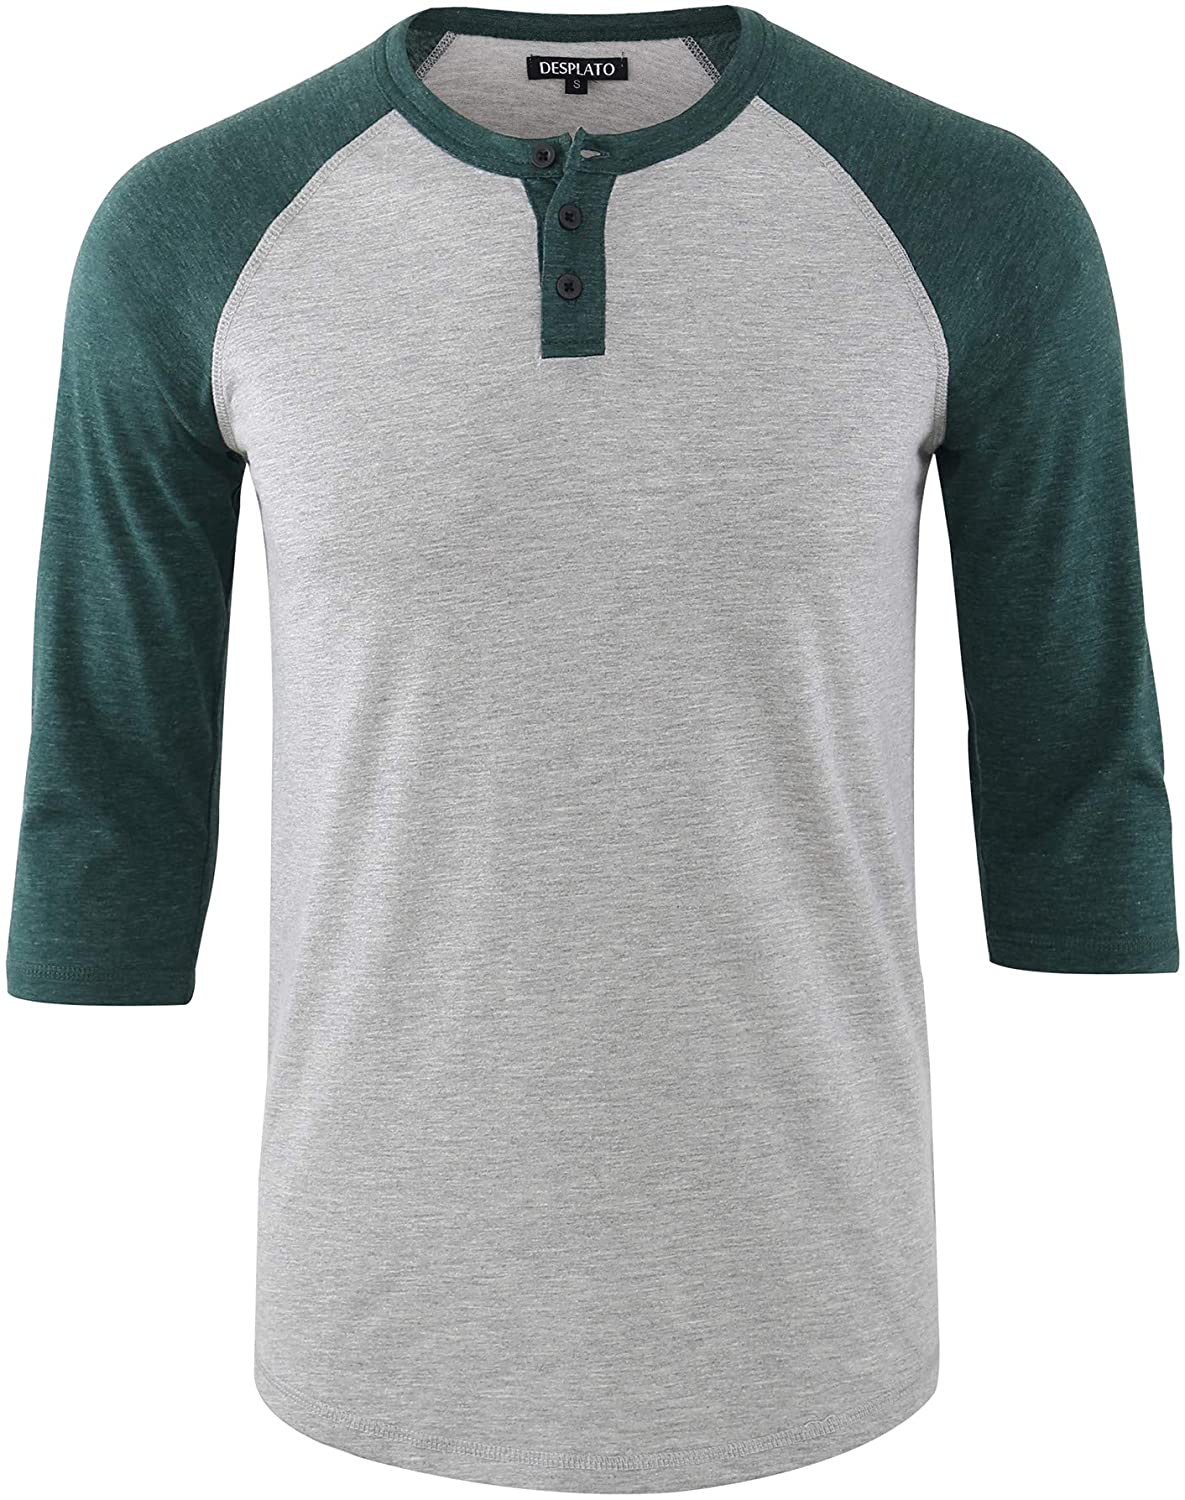 DESPLATO Men's Casual Vintage 3/4 Sleeve Henley Baseball Jersey Knit T Shirts 